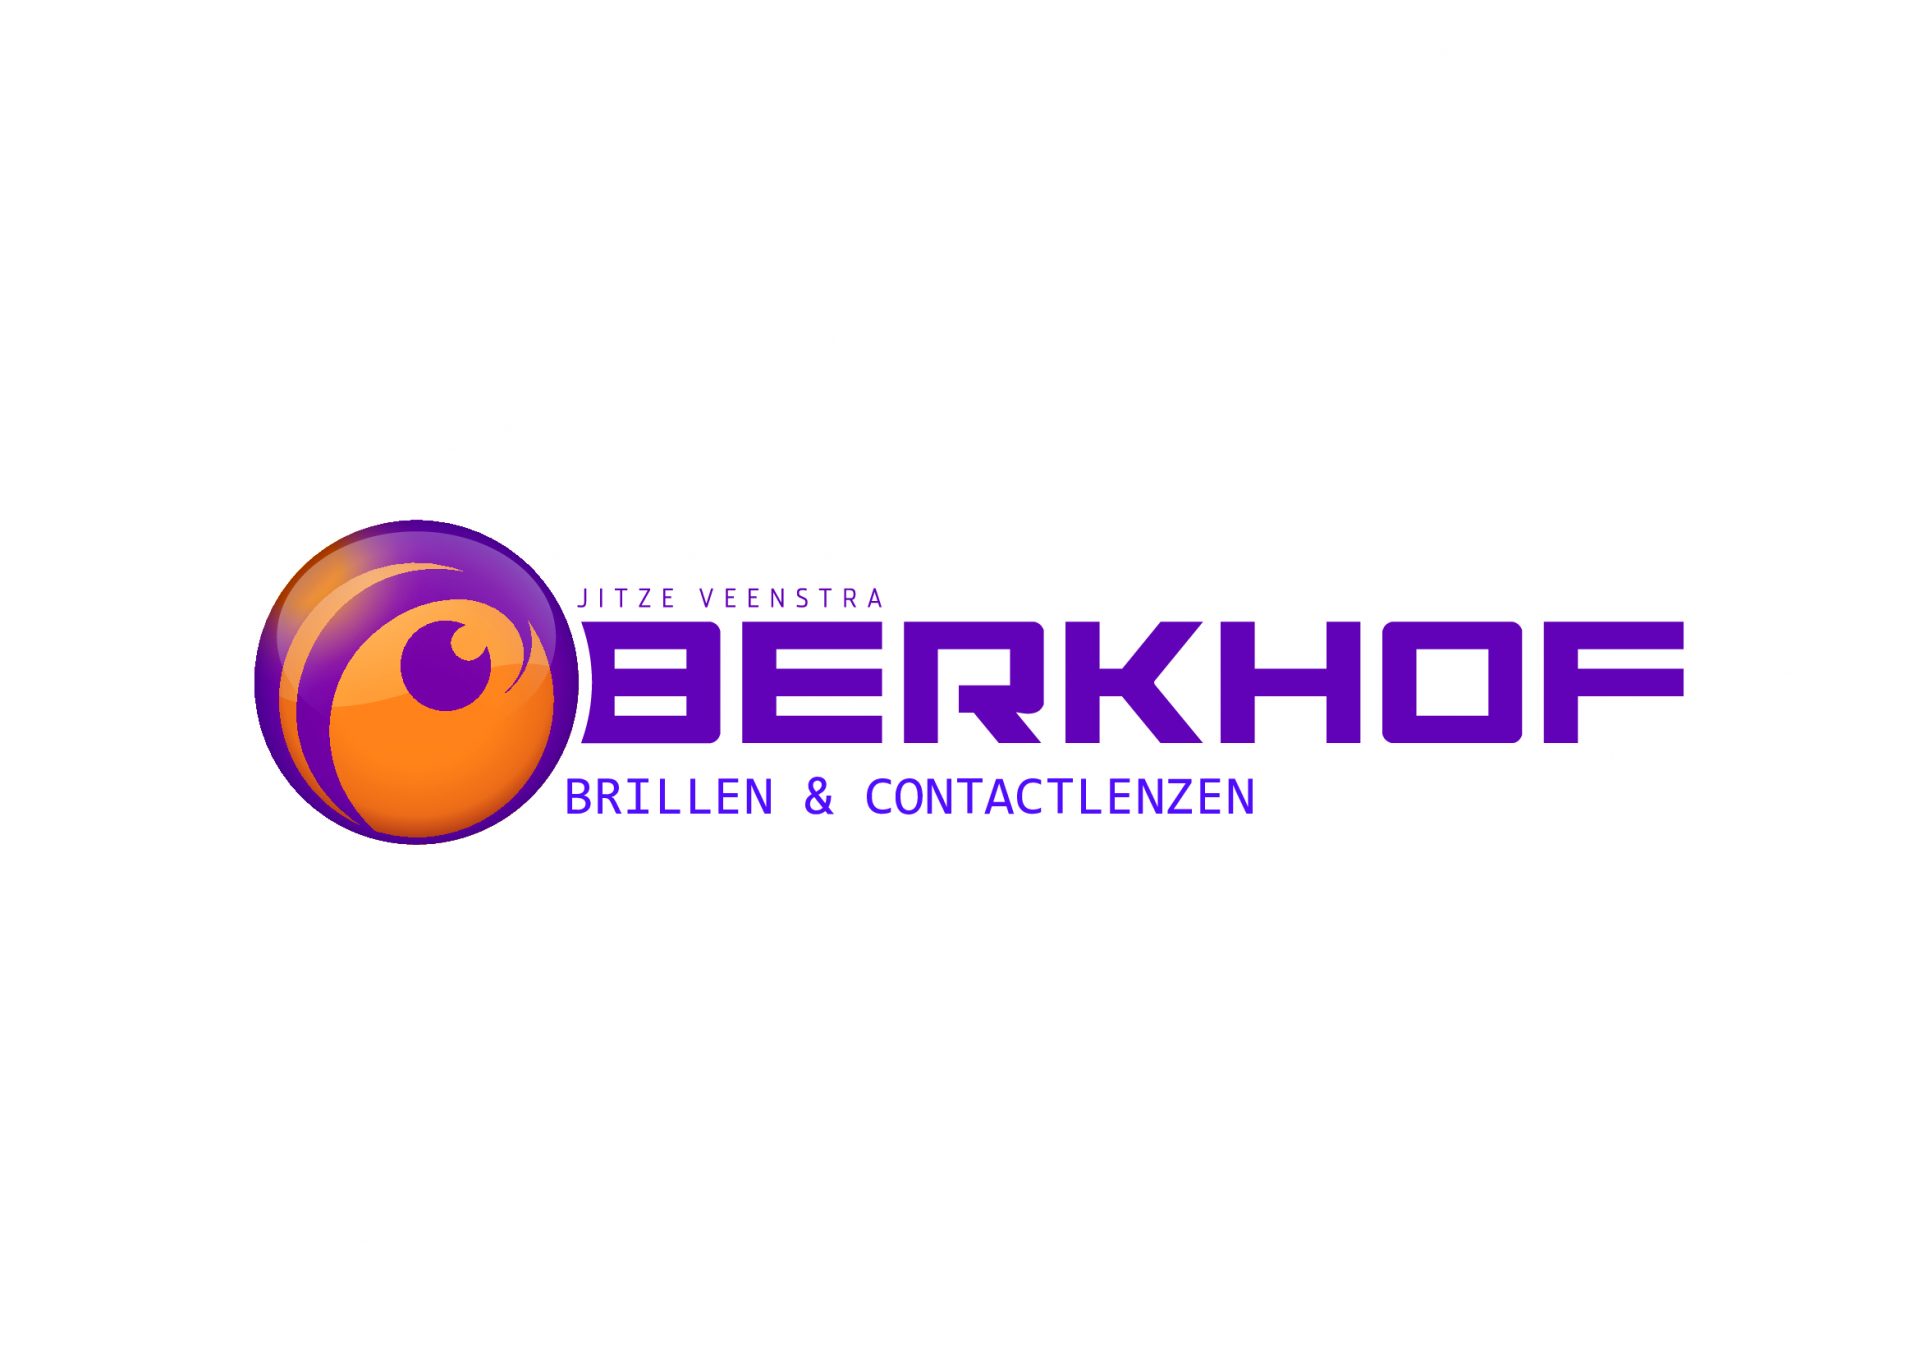 Berkhof